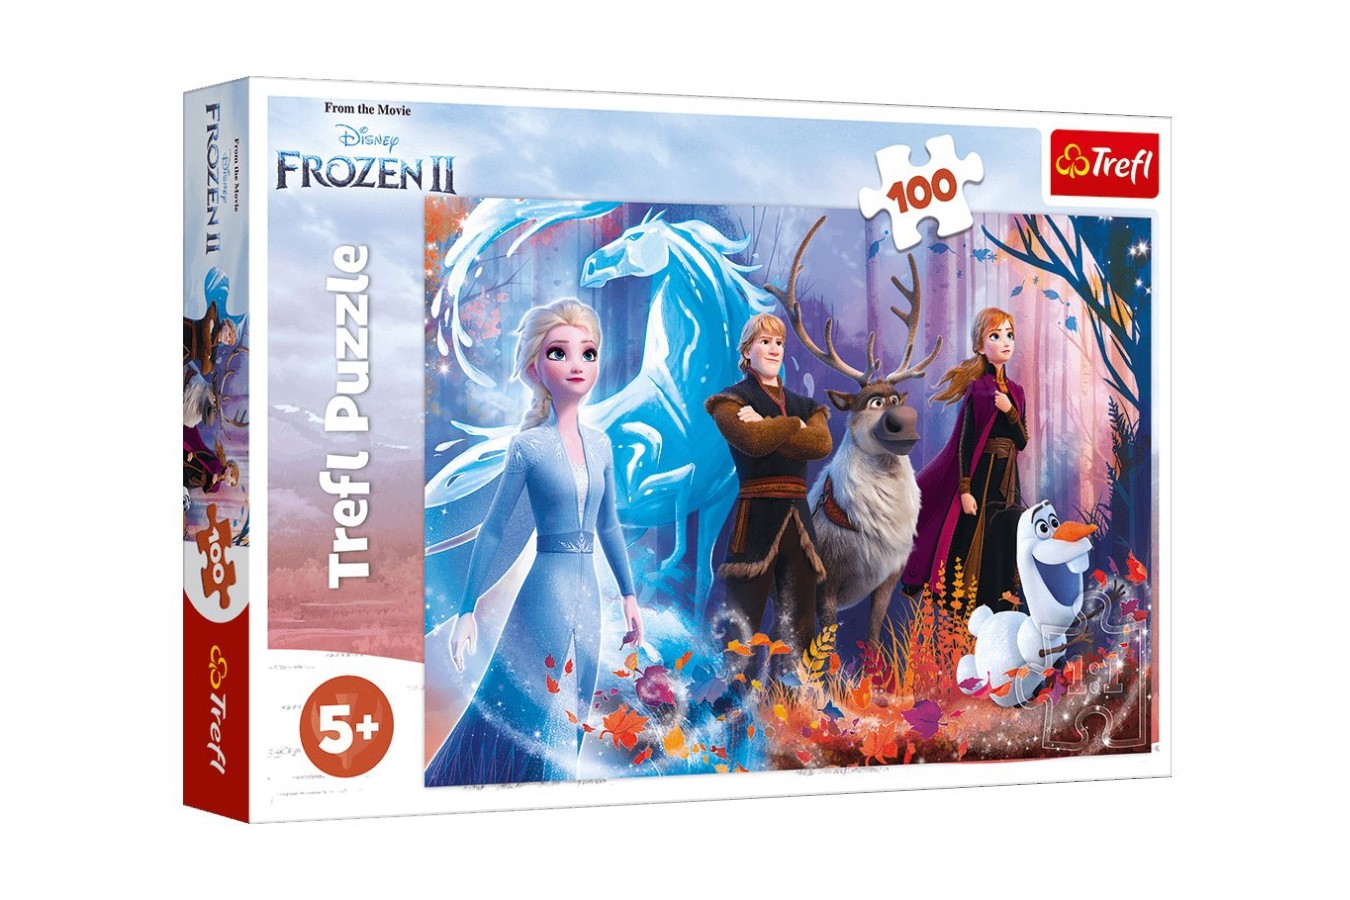 Puzzle Trefl - Frozen II, 100 piese (16366)